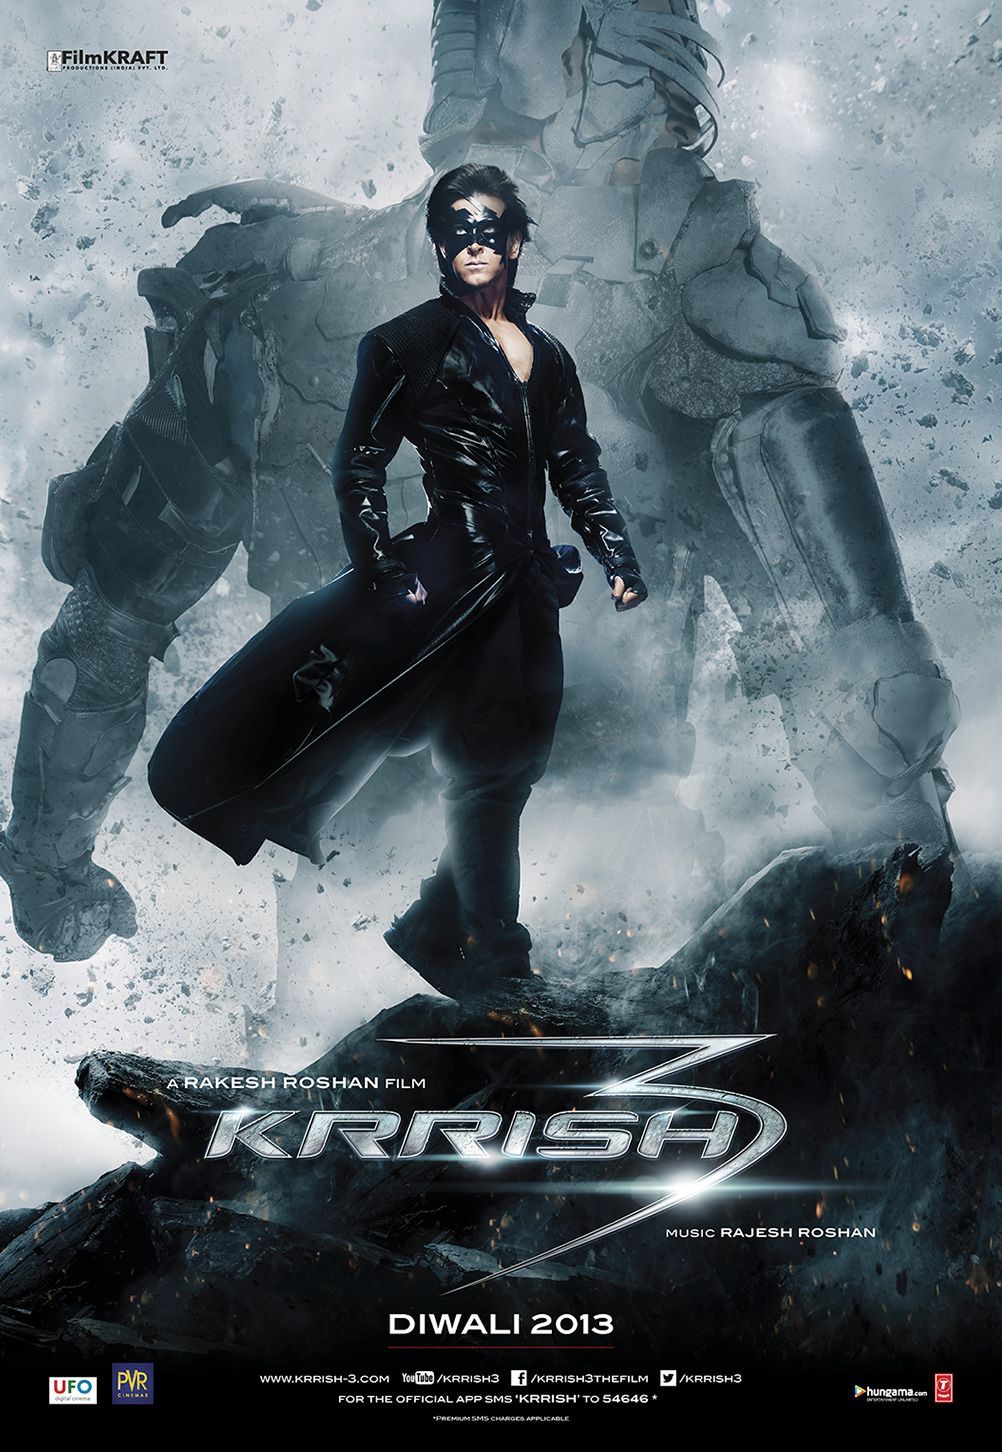 Krrish 3 Movie Poster Design. Krrish movie, Krrish Hindi movies